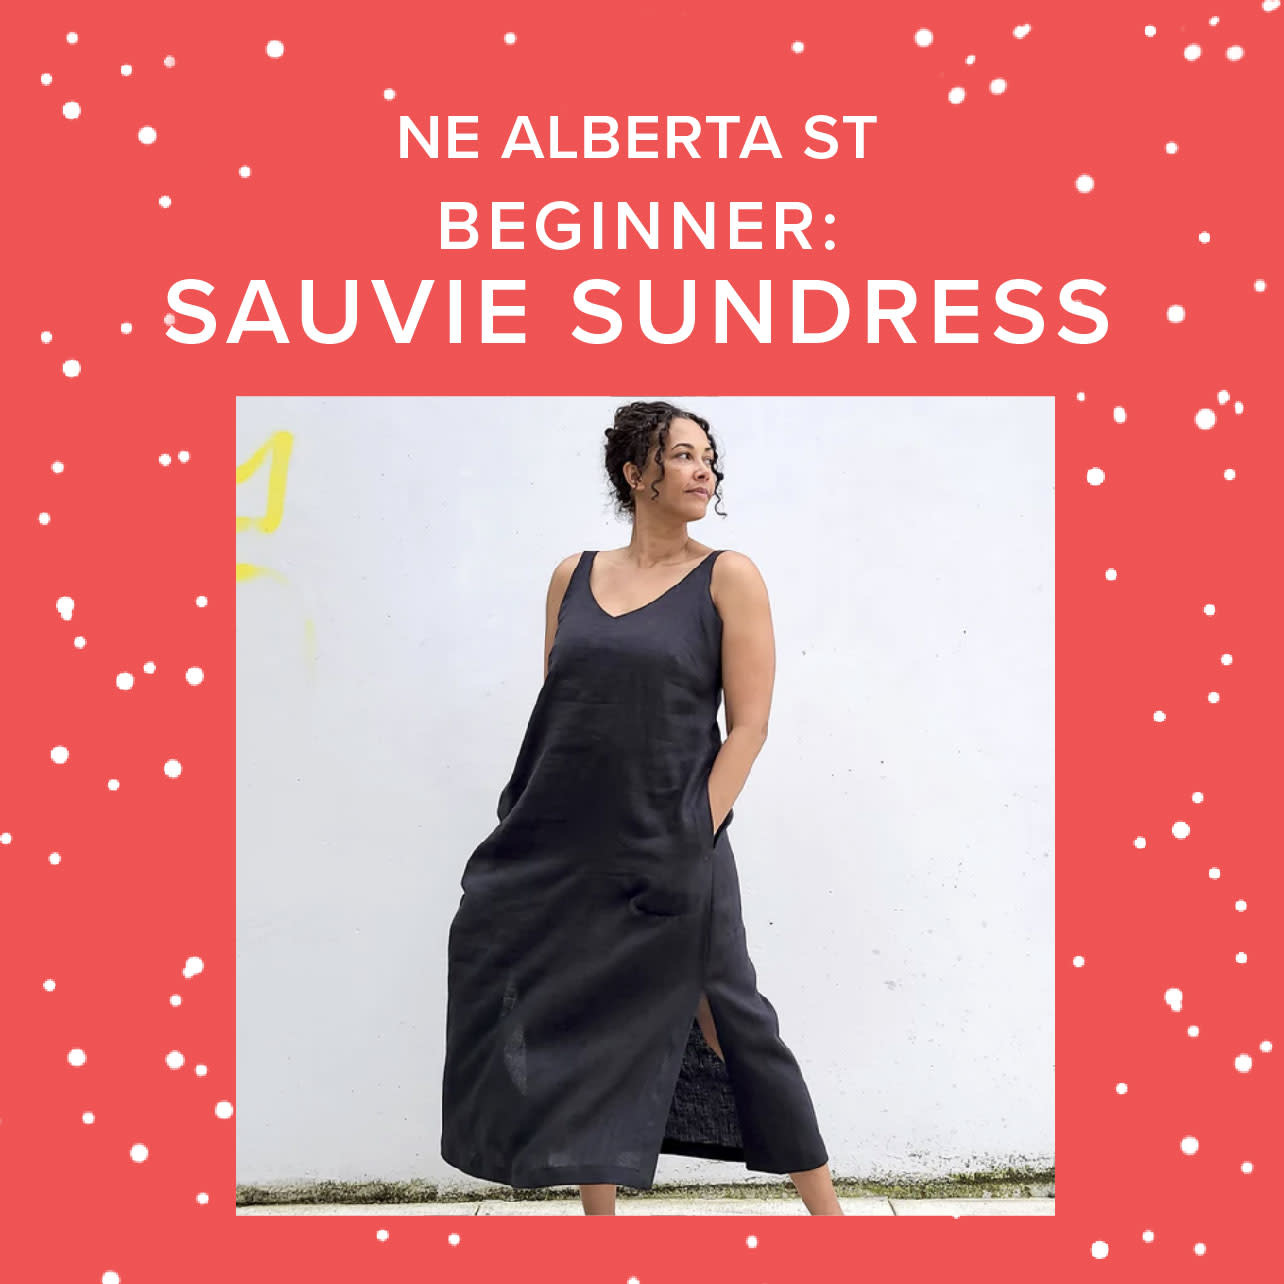 Colleen Connolly Beginner: Sauvie Sundress, Alberta St. Store, Sundays, April 16th & 23rd, 10am-2pm